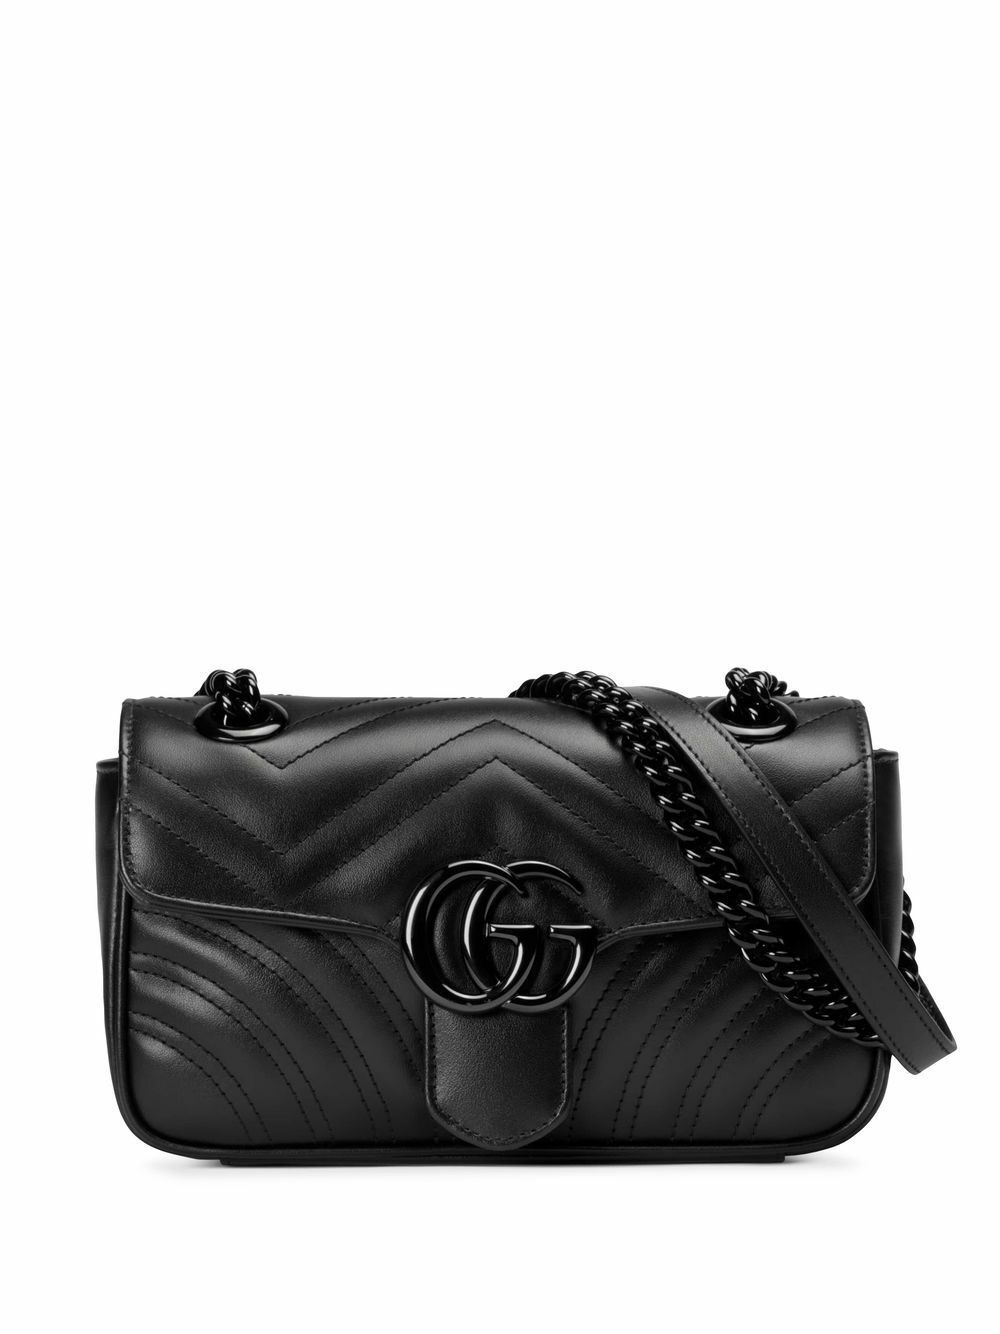 GUCCI - Gg Marmont Mini Leather Shoulder Bag Gucci